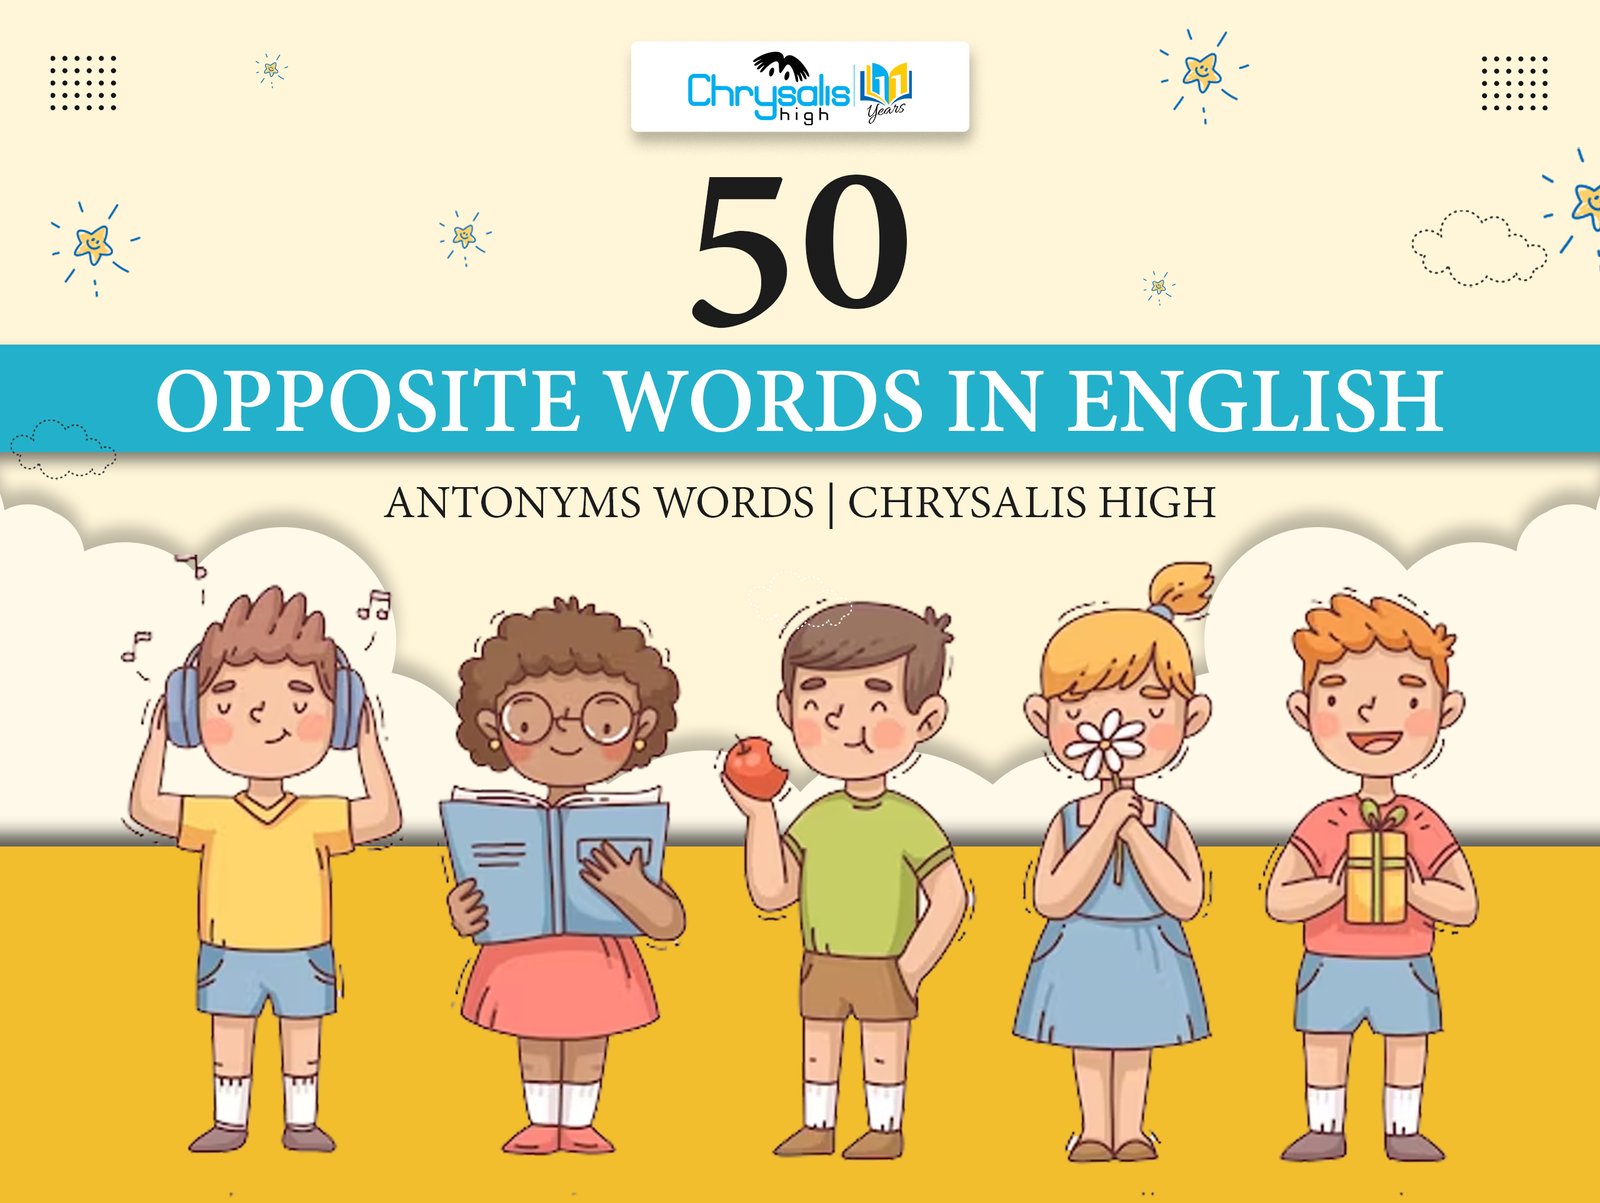 50 Opposite Words In English/Antonyms Words - Chrysalis High